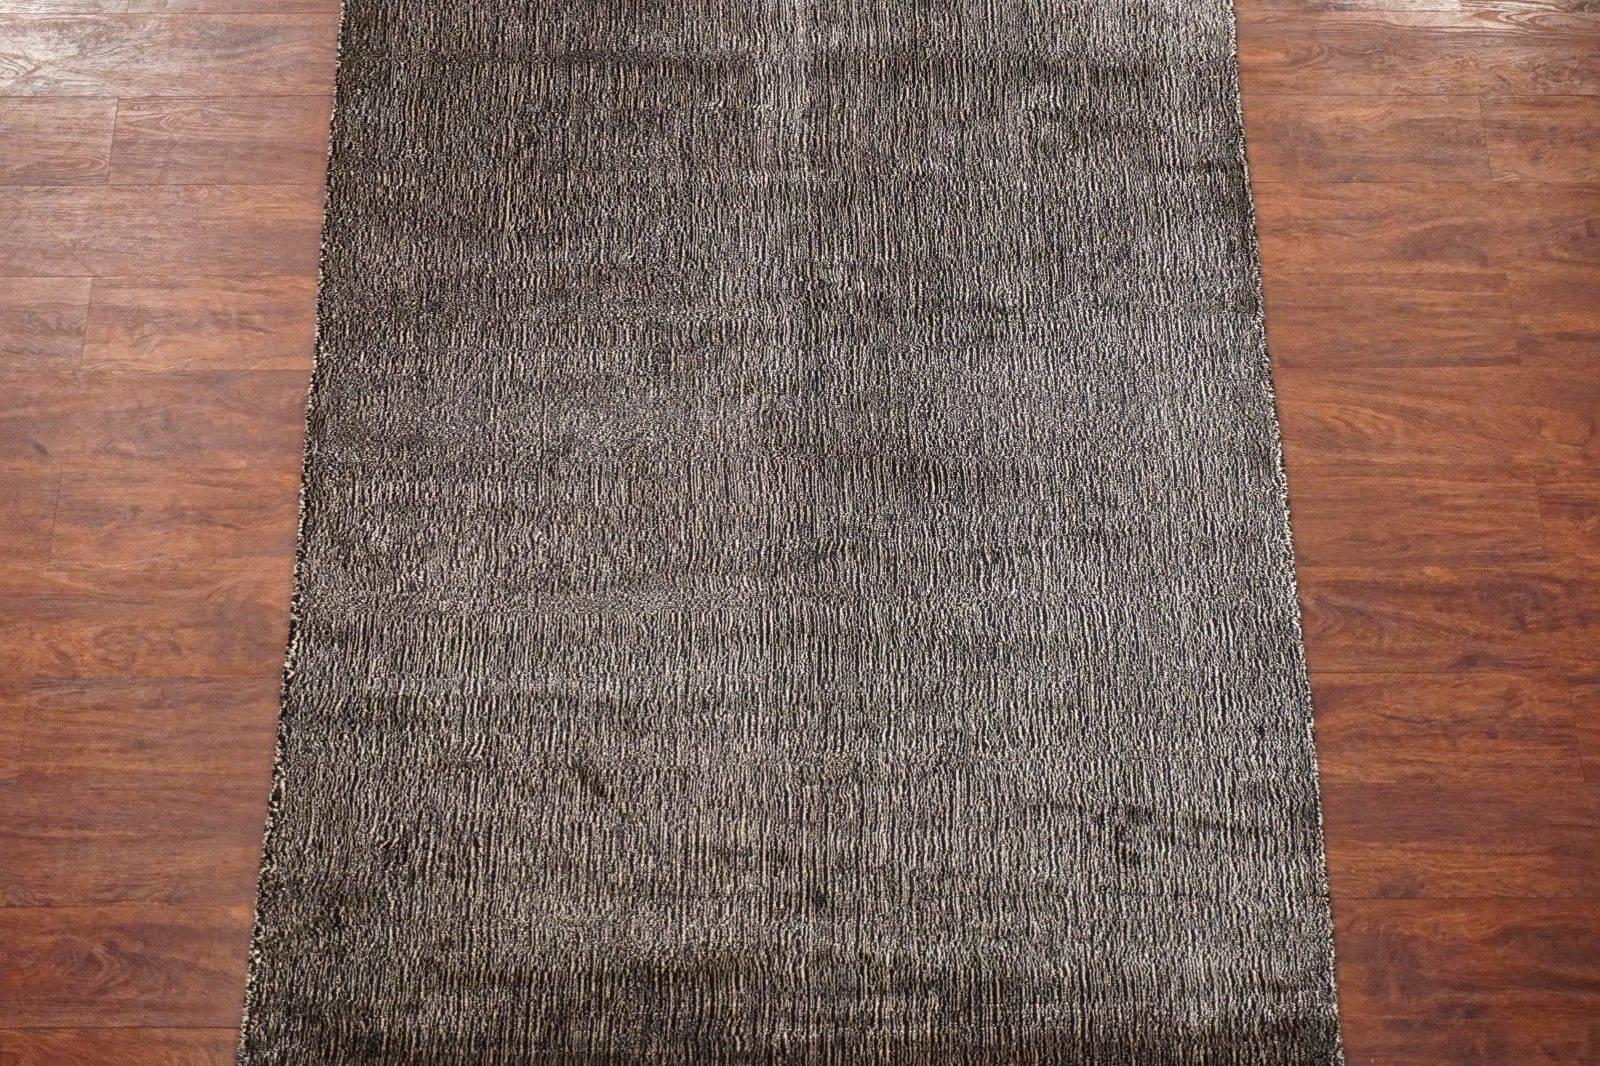 Modern bamboo silk area rug

2015

Measures: 4' x 5' 11